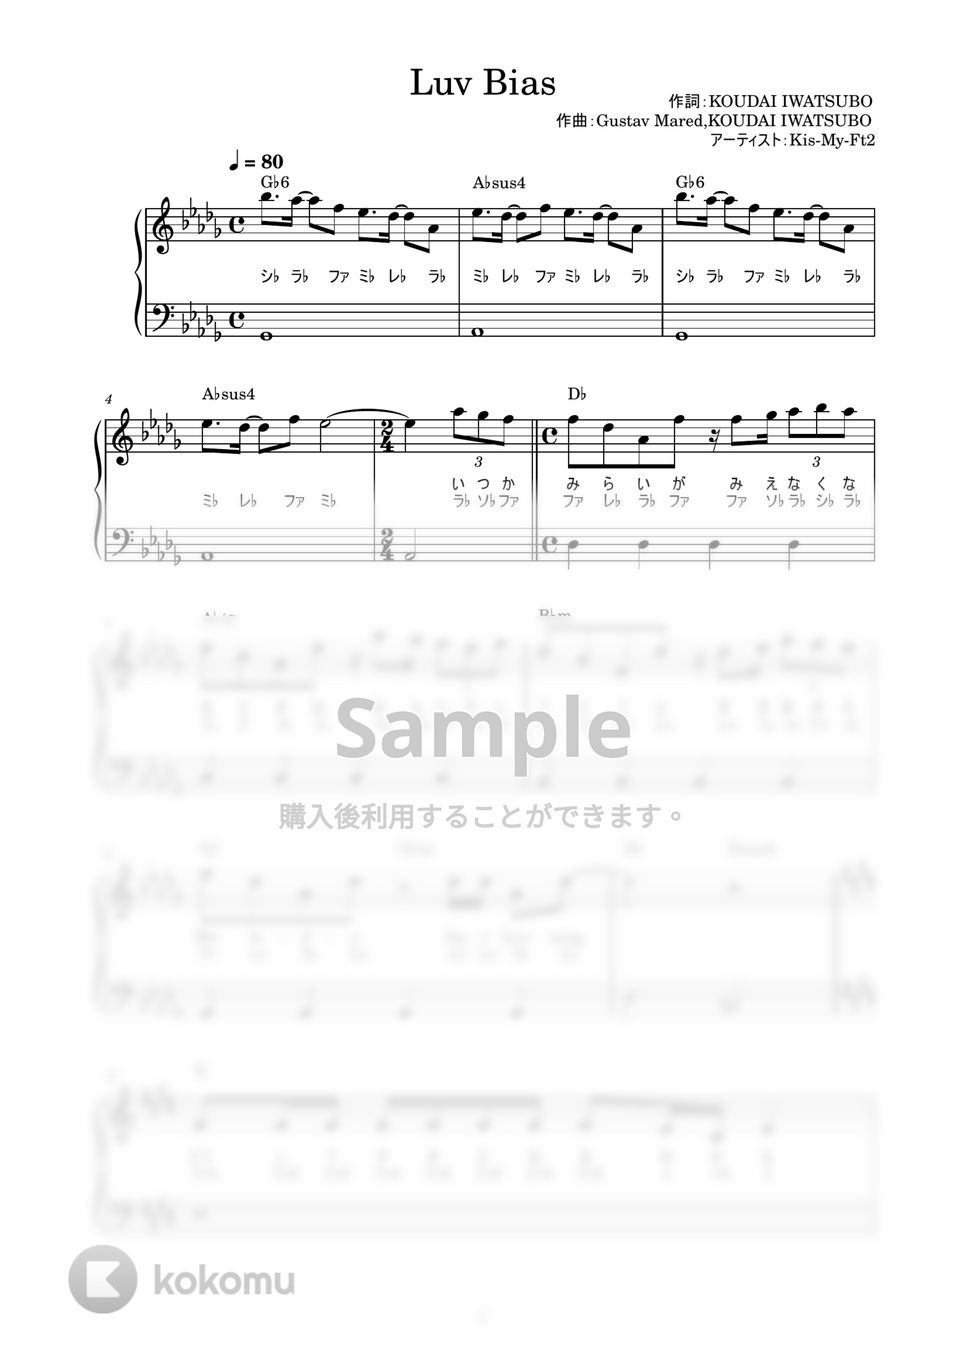 Kis-My-Ft2 - LUV BIAS (かんたん / 歌詞付き / ドレミ付き / 初心者) by piano.tokyo